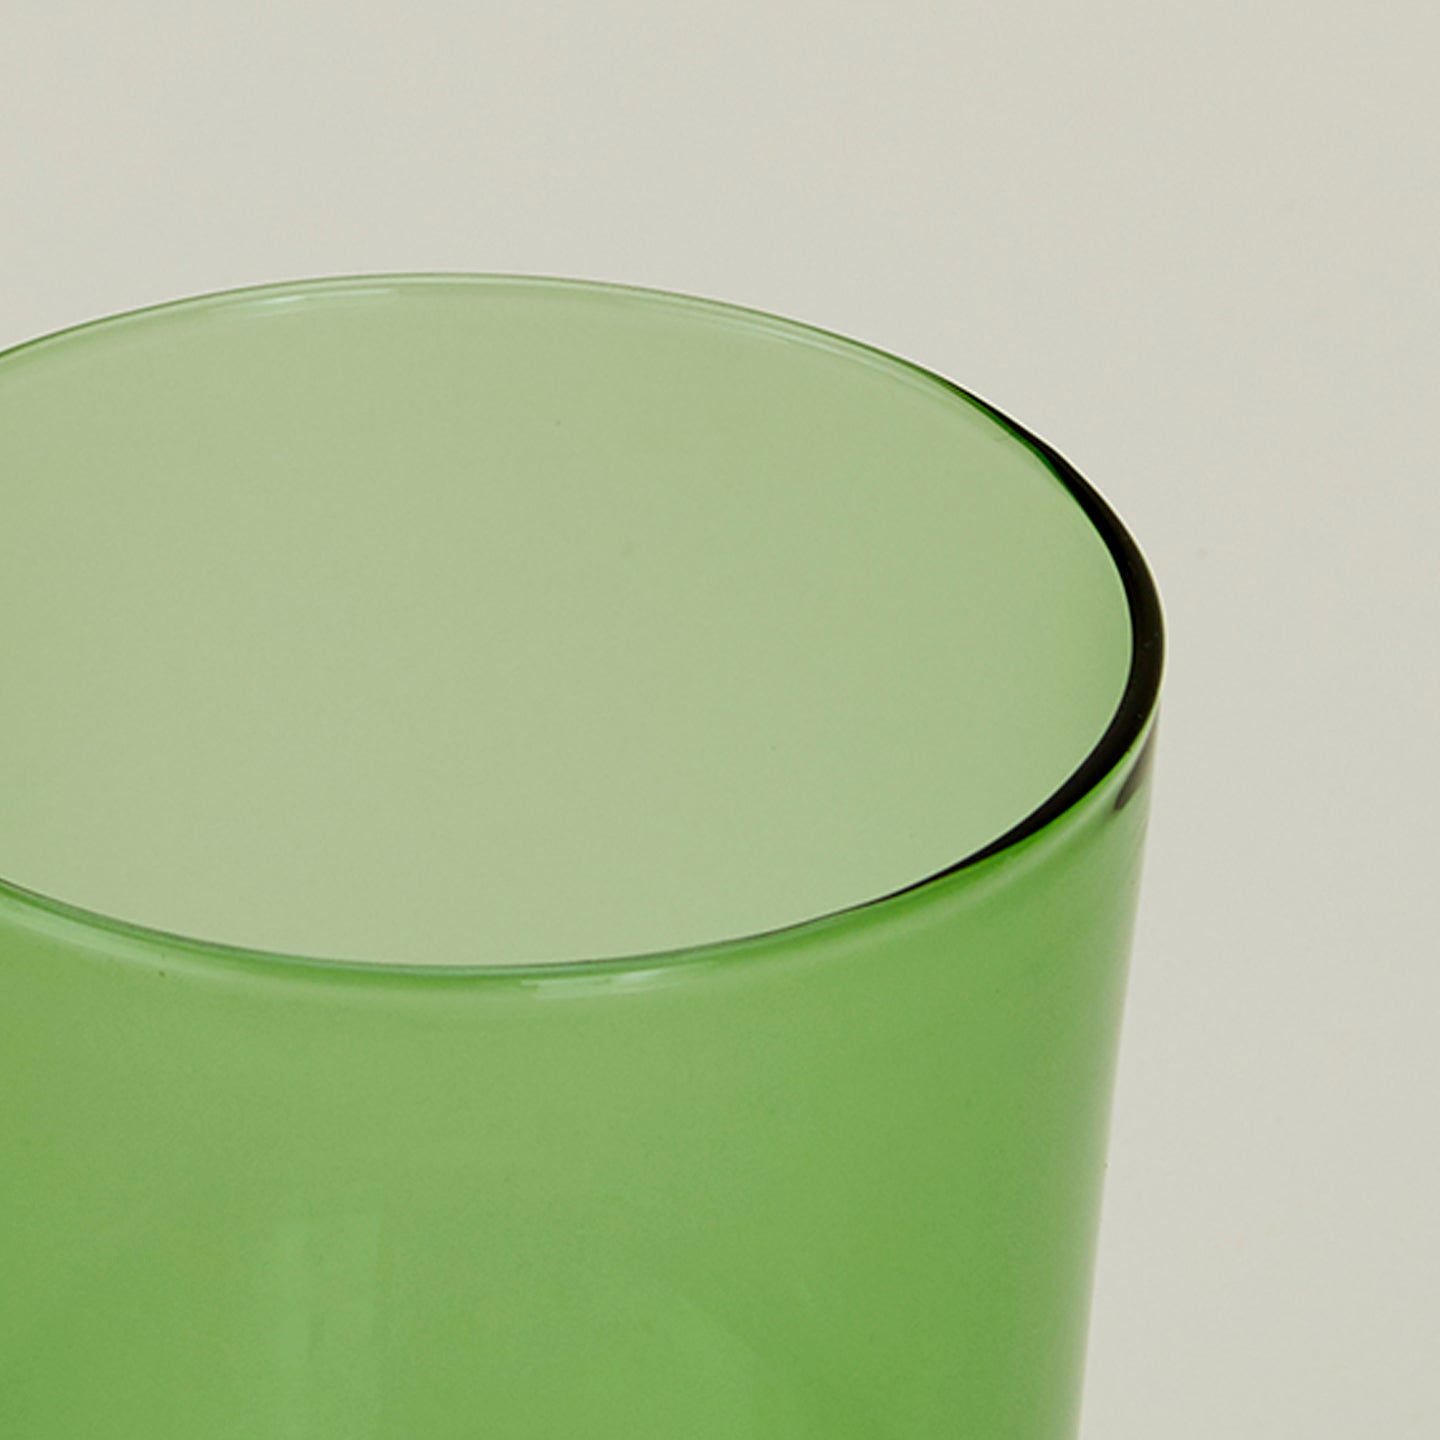 Essential Glassware - Green